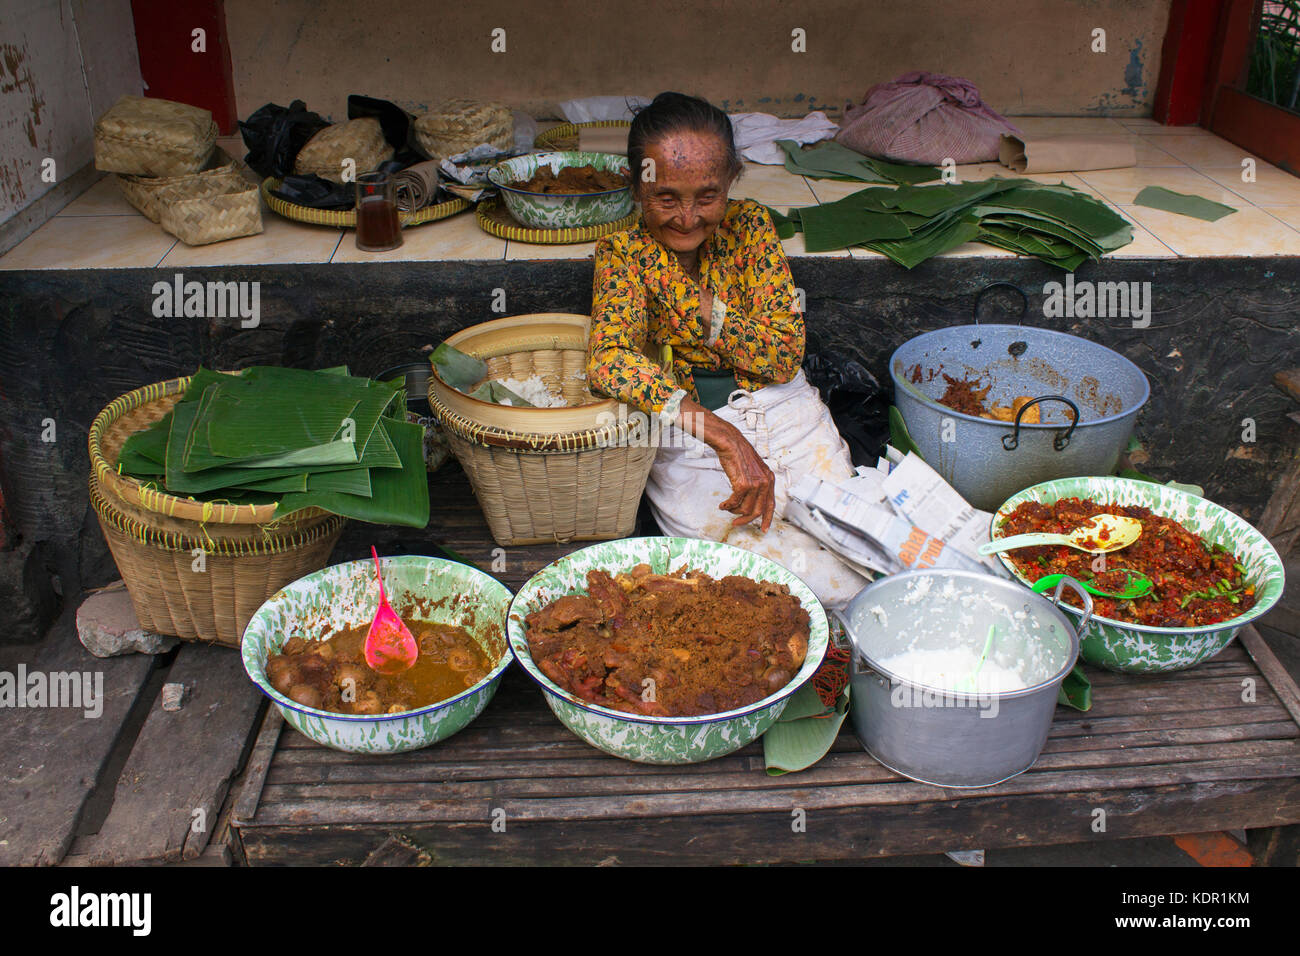 Indonesia, Java, Yogyakarta, Javanese woman selling gudeg on the street Stock Photo